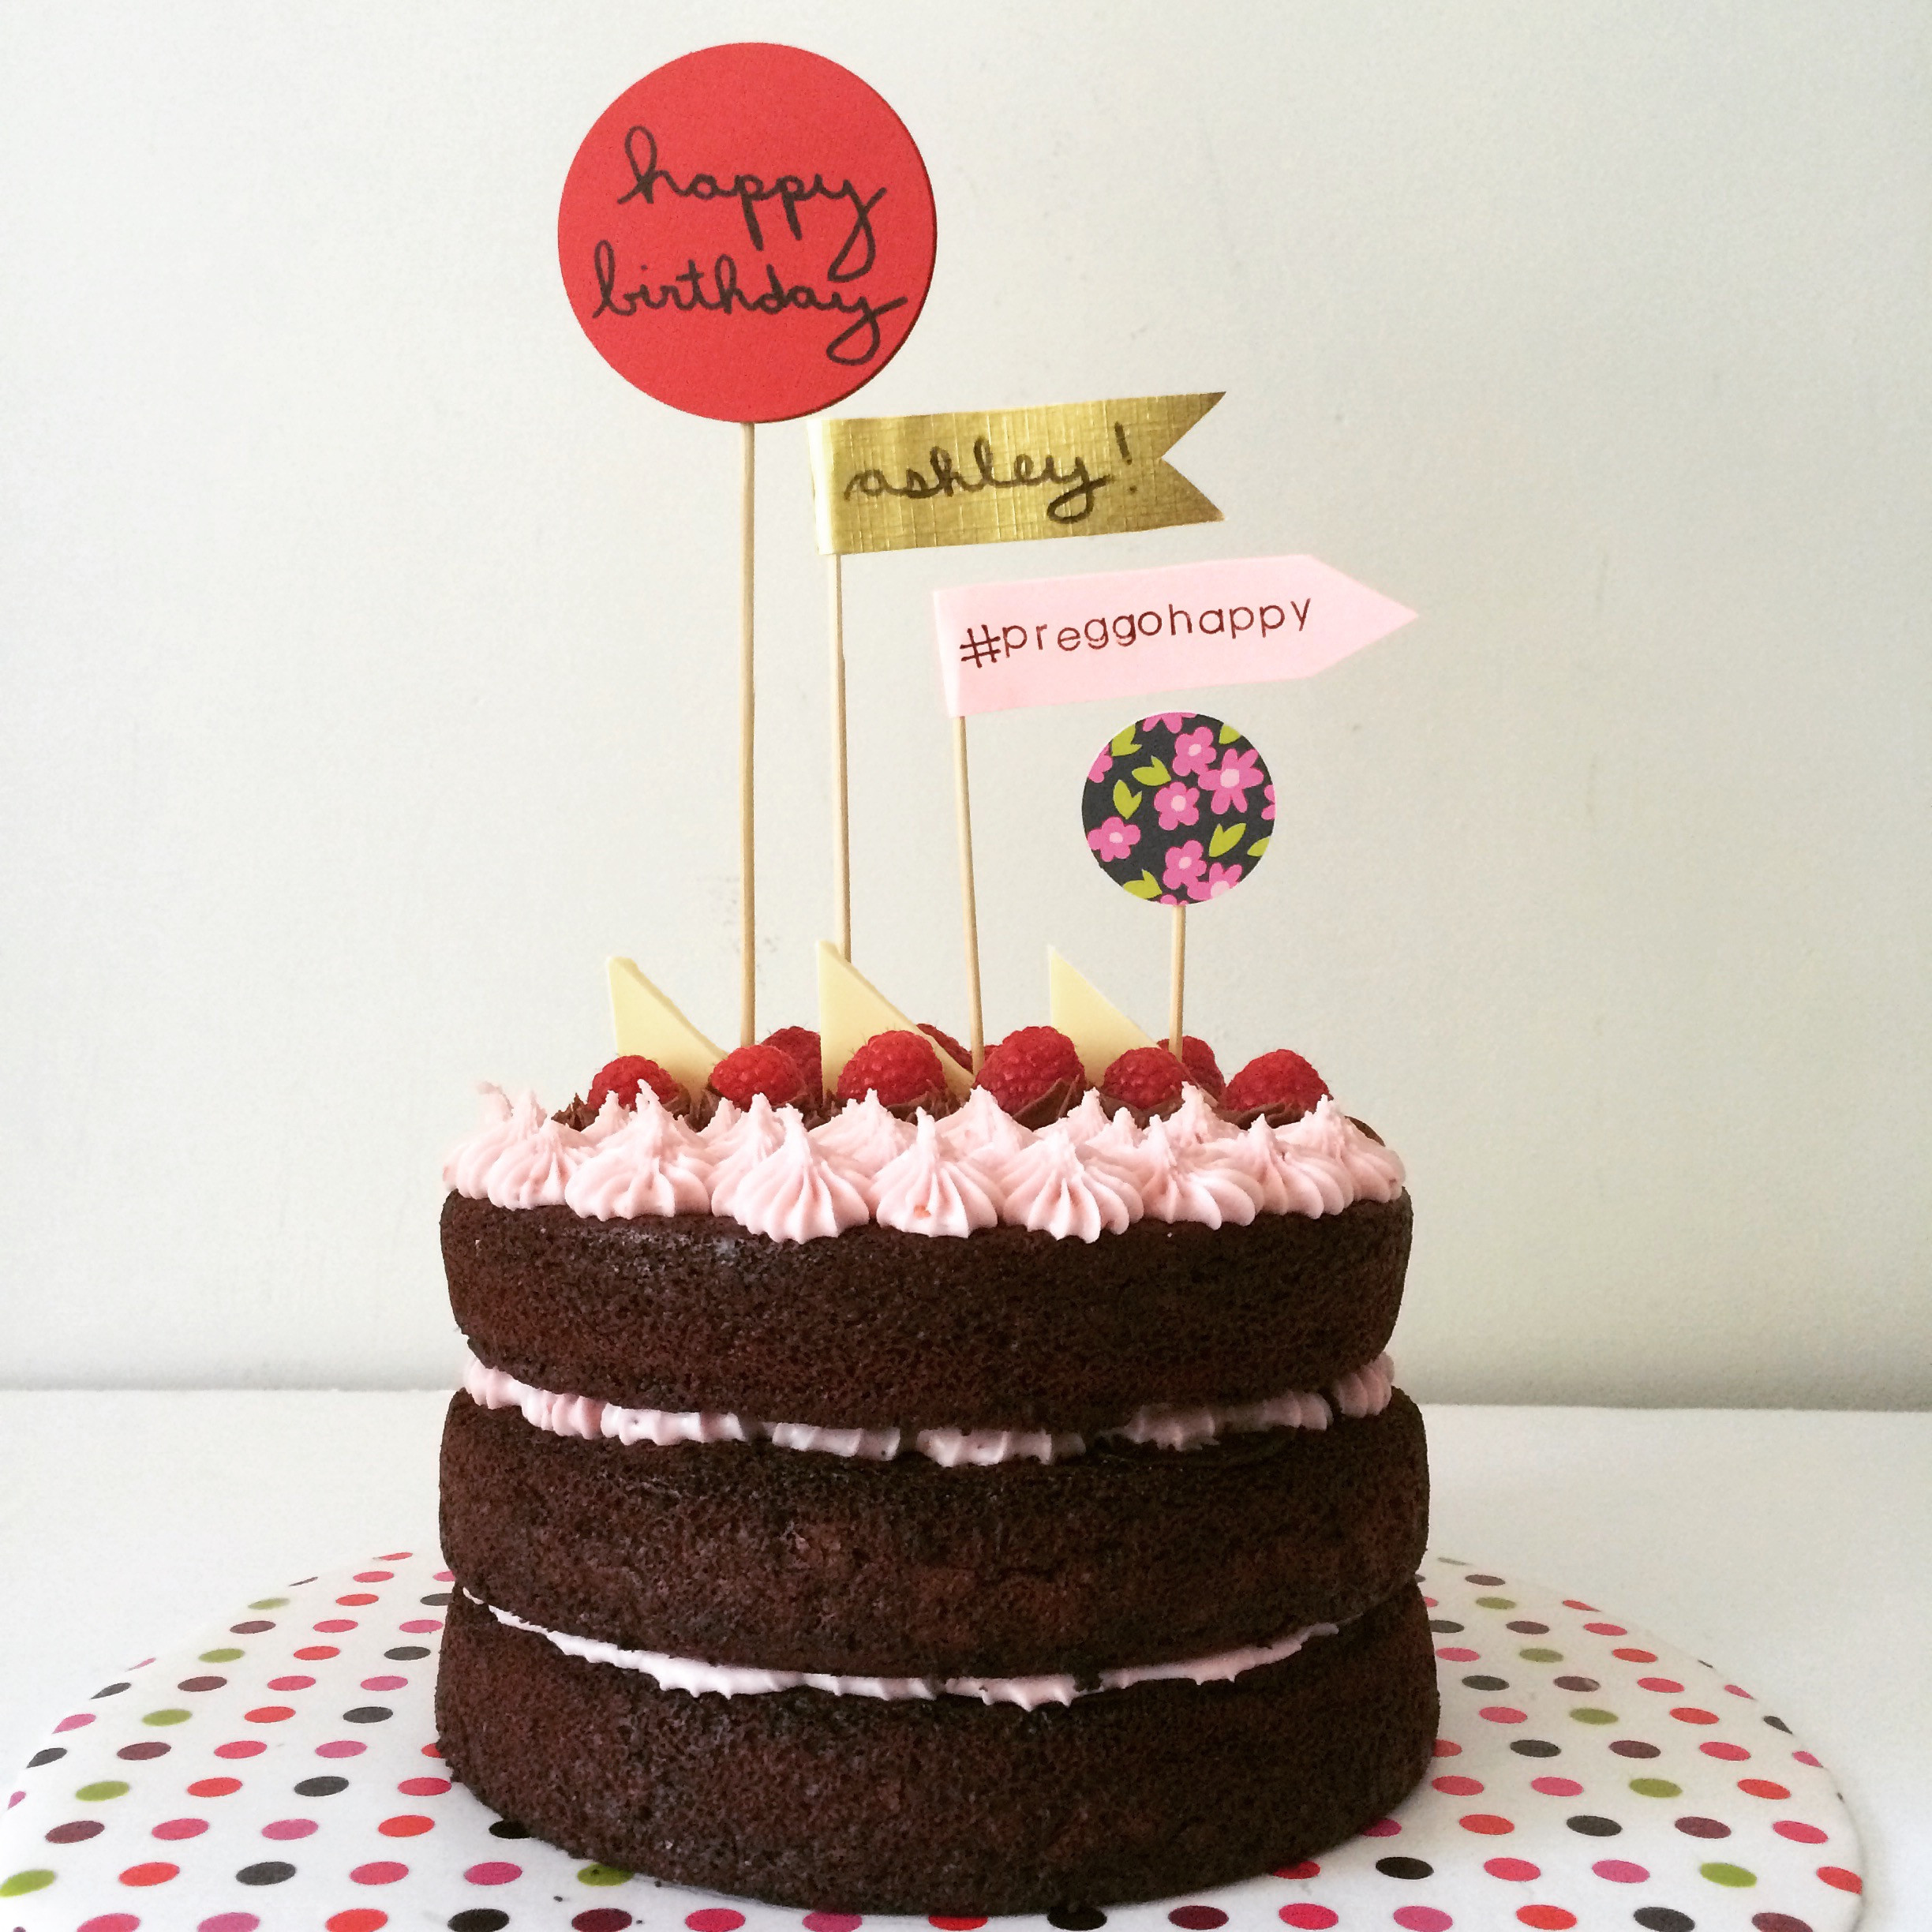 Best ideas about Happy Birthday Ashley Cake
. Save or Pin happy birthday ashley carrot creamcarrot cream Now.